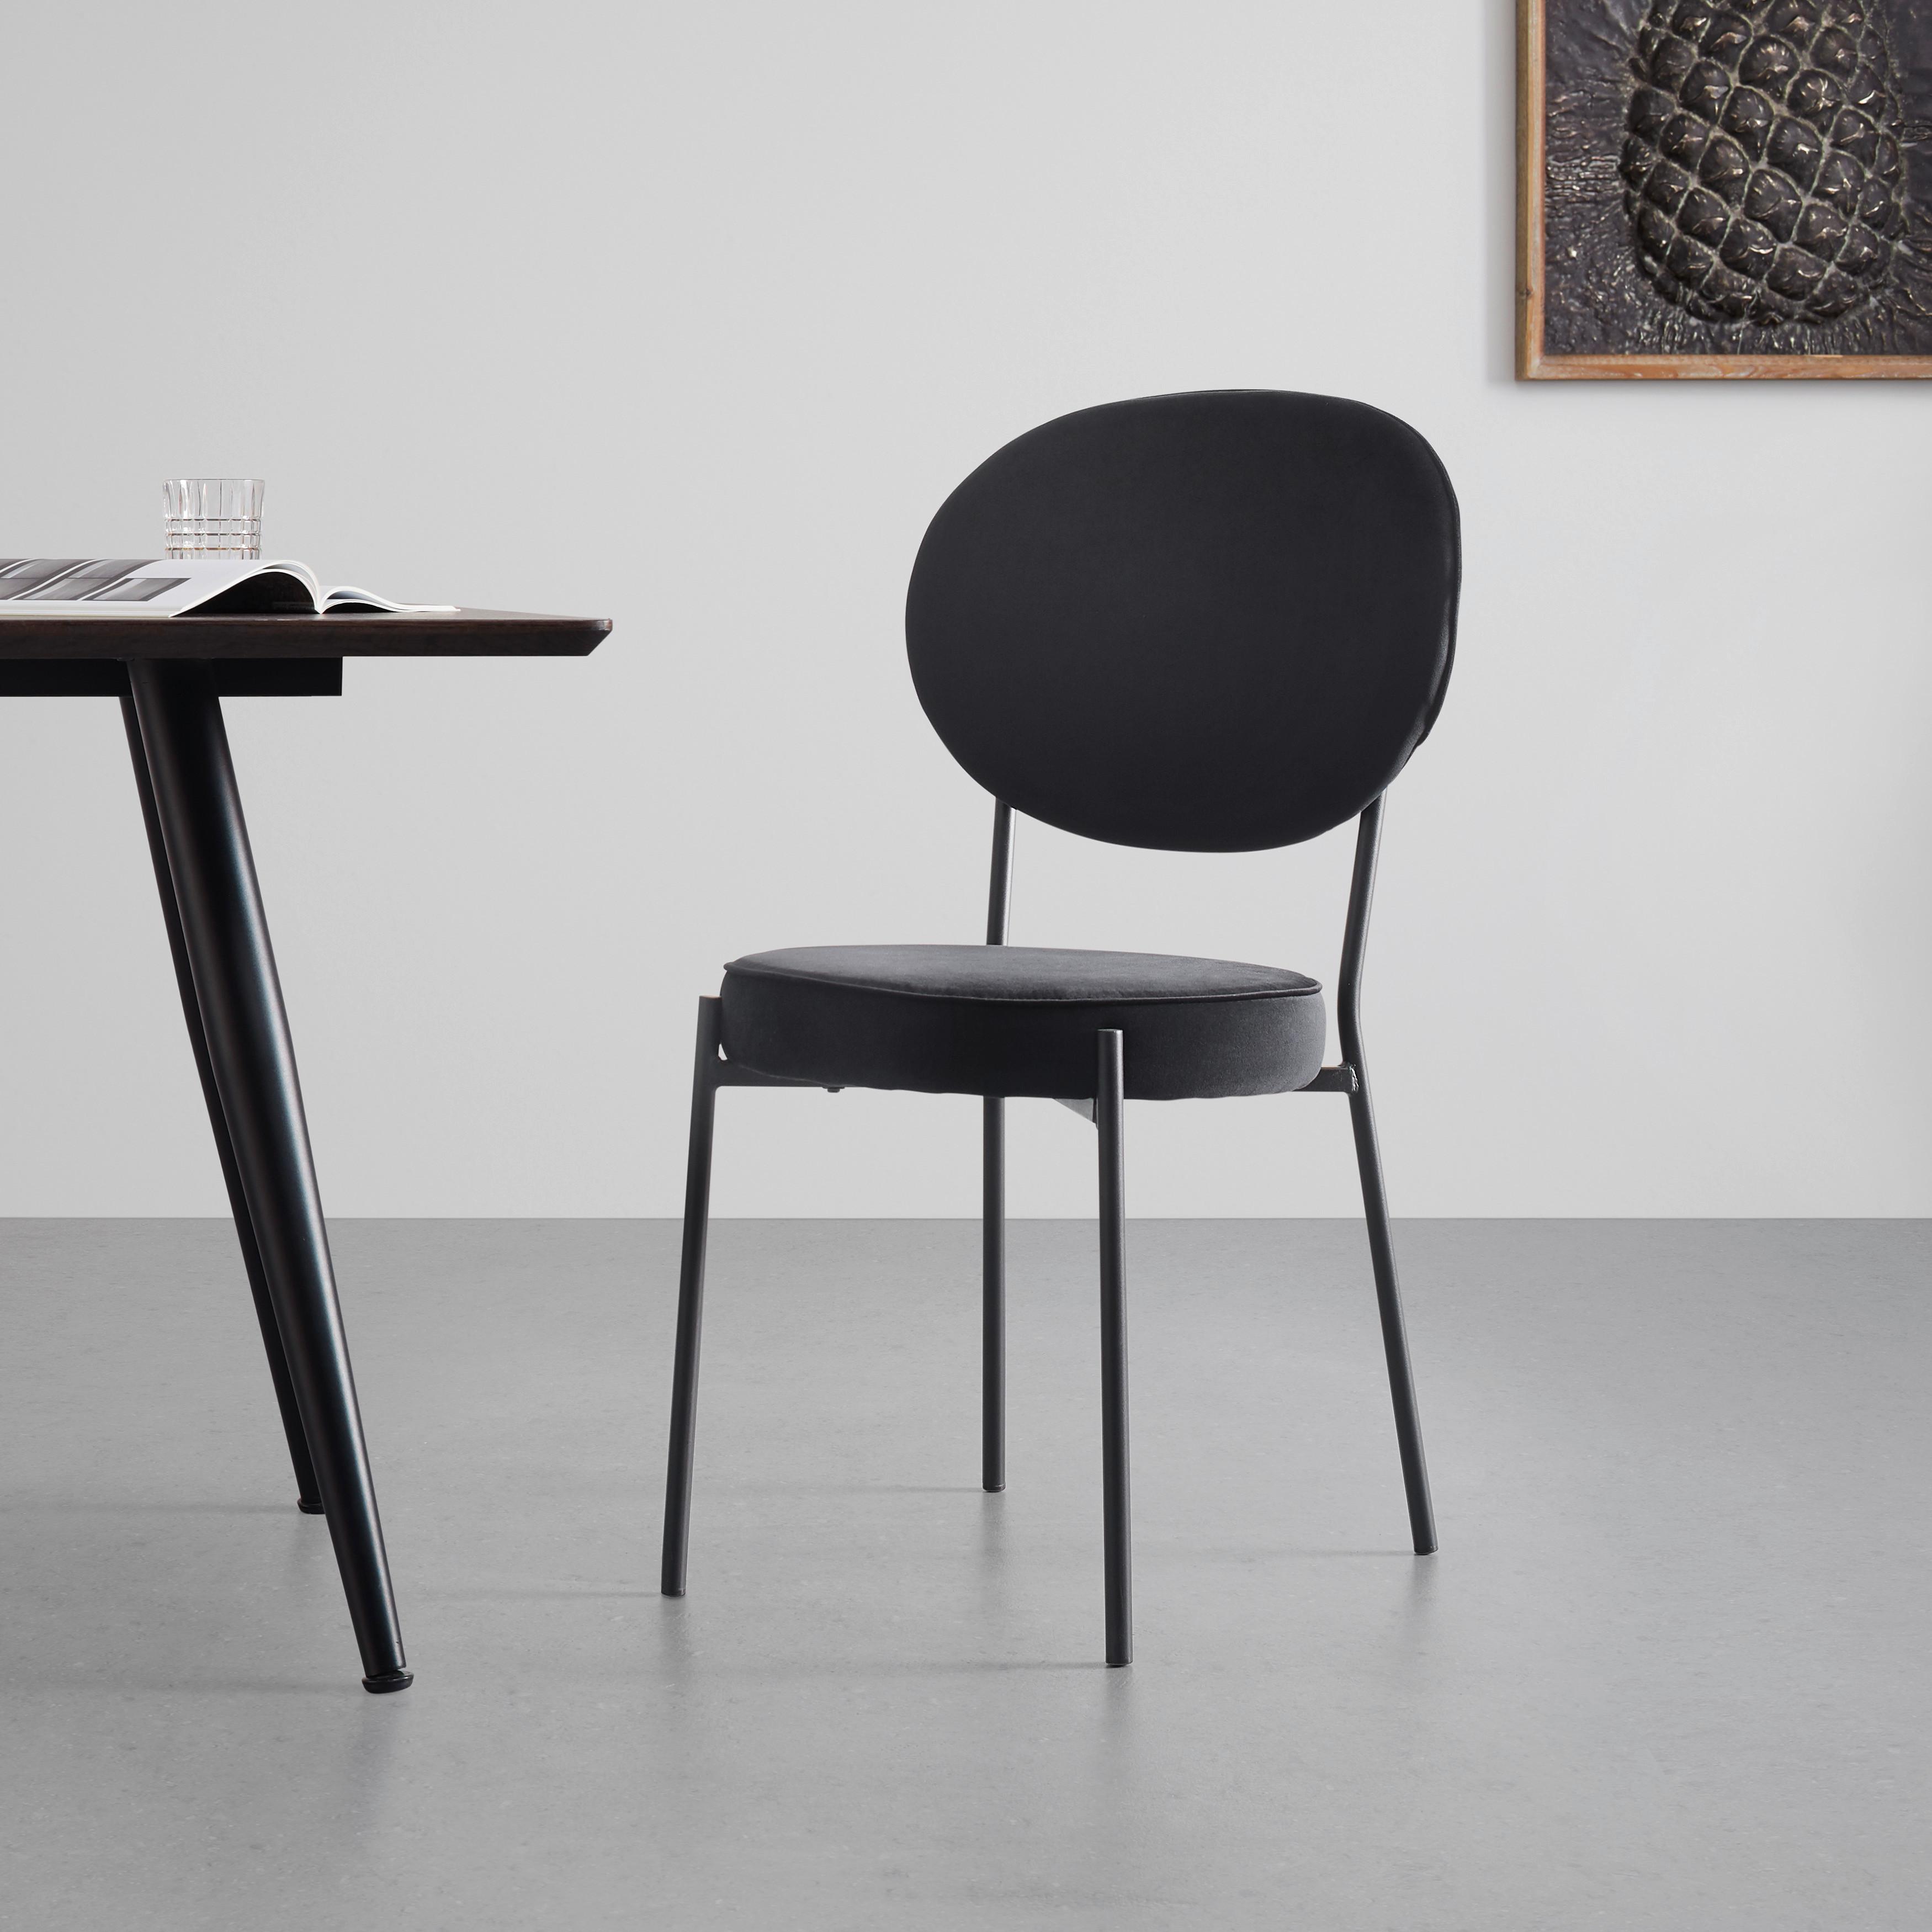 Stuhl "Florentin", schwarz - Schwarz, MODERN, Holz/Textil (45/92/57cm) - Bessagi Home